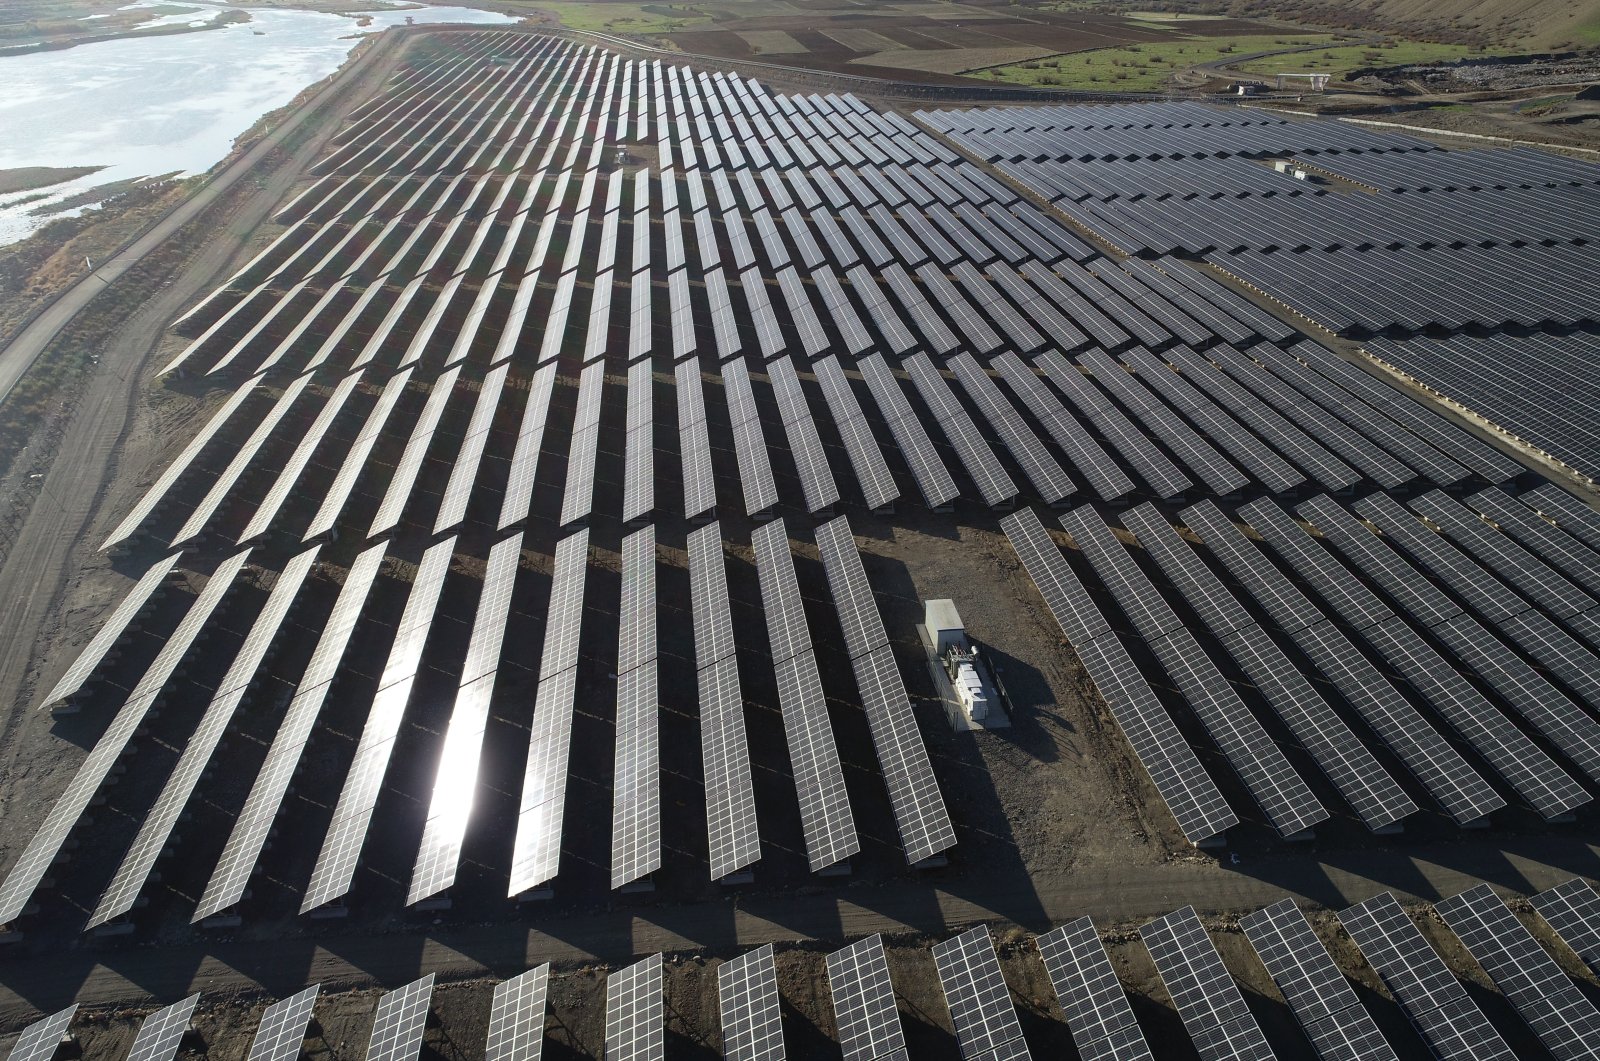 Solar panels are seen at a hybrid solar power plant in the eastern province of Bingöl, Turkey, Nov. 9, 2021. (AA Photo)